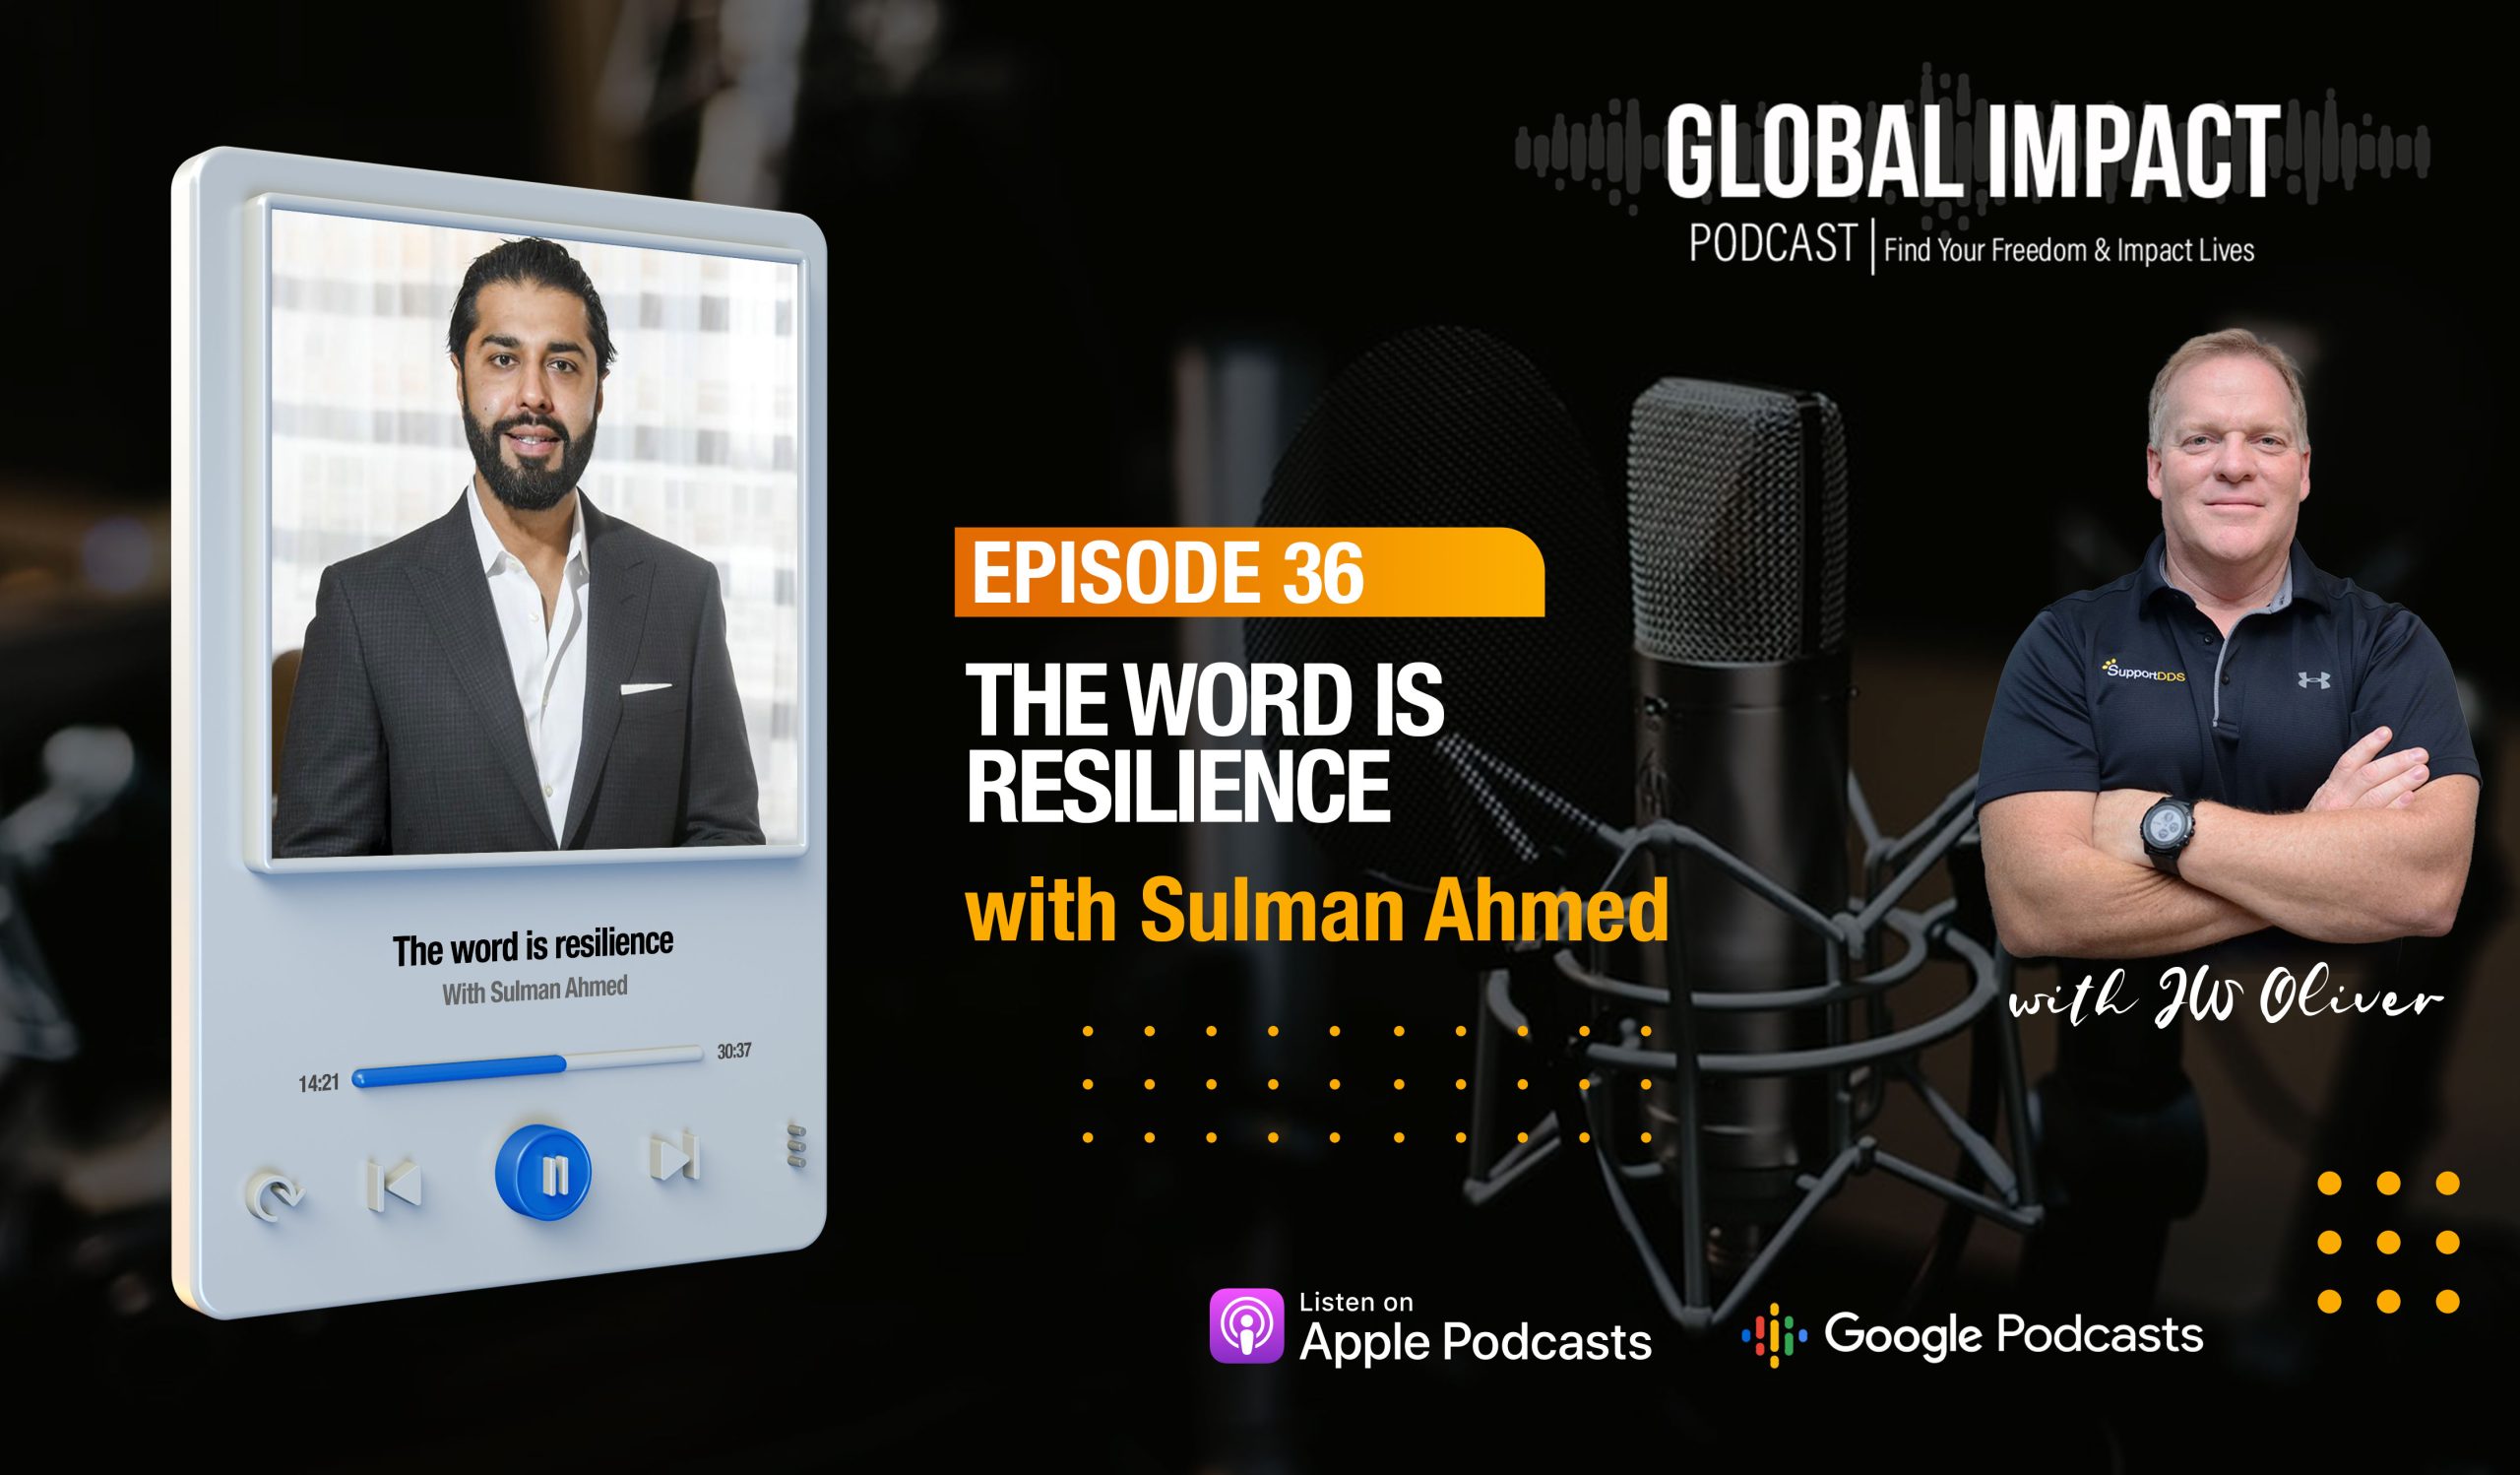 Global Impact Podcast